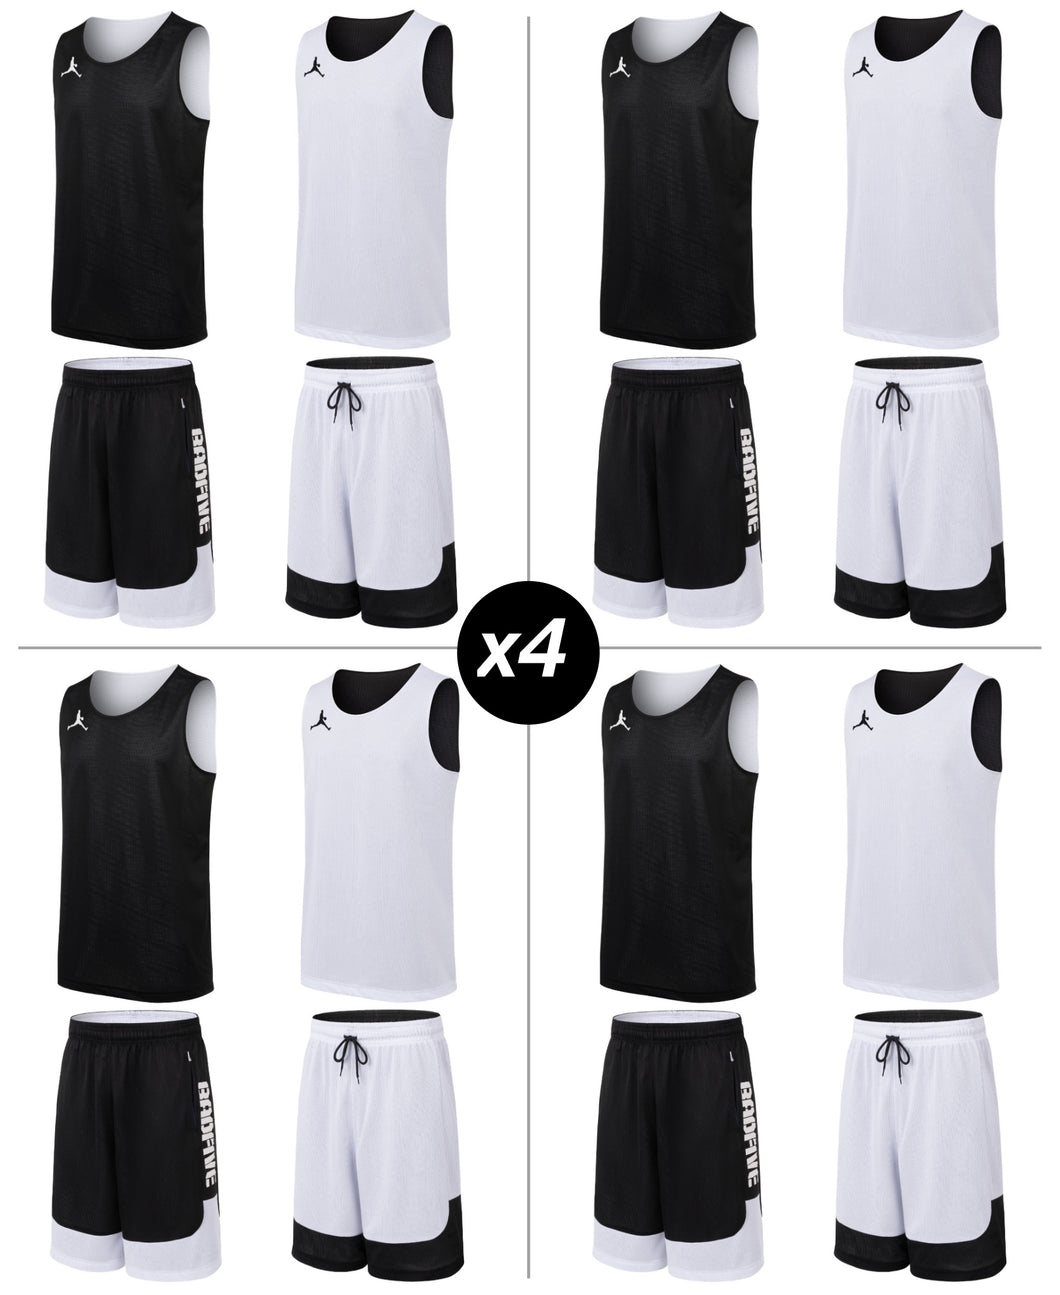 4 X Réversible Tenue de basket-ball noir / blanc